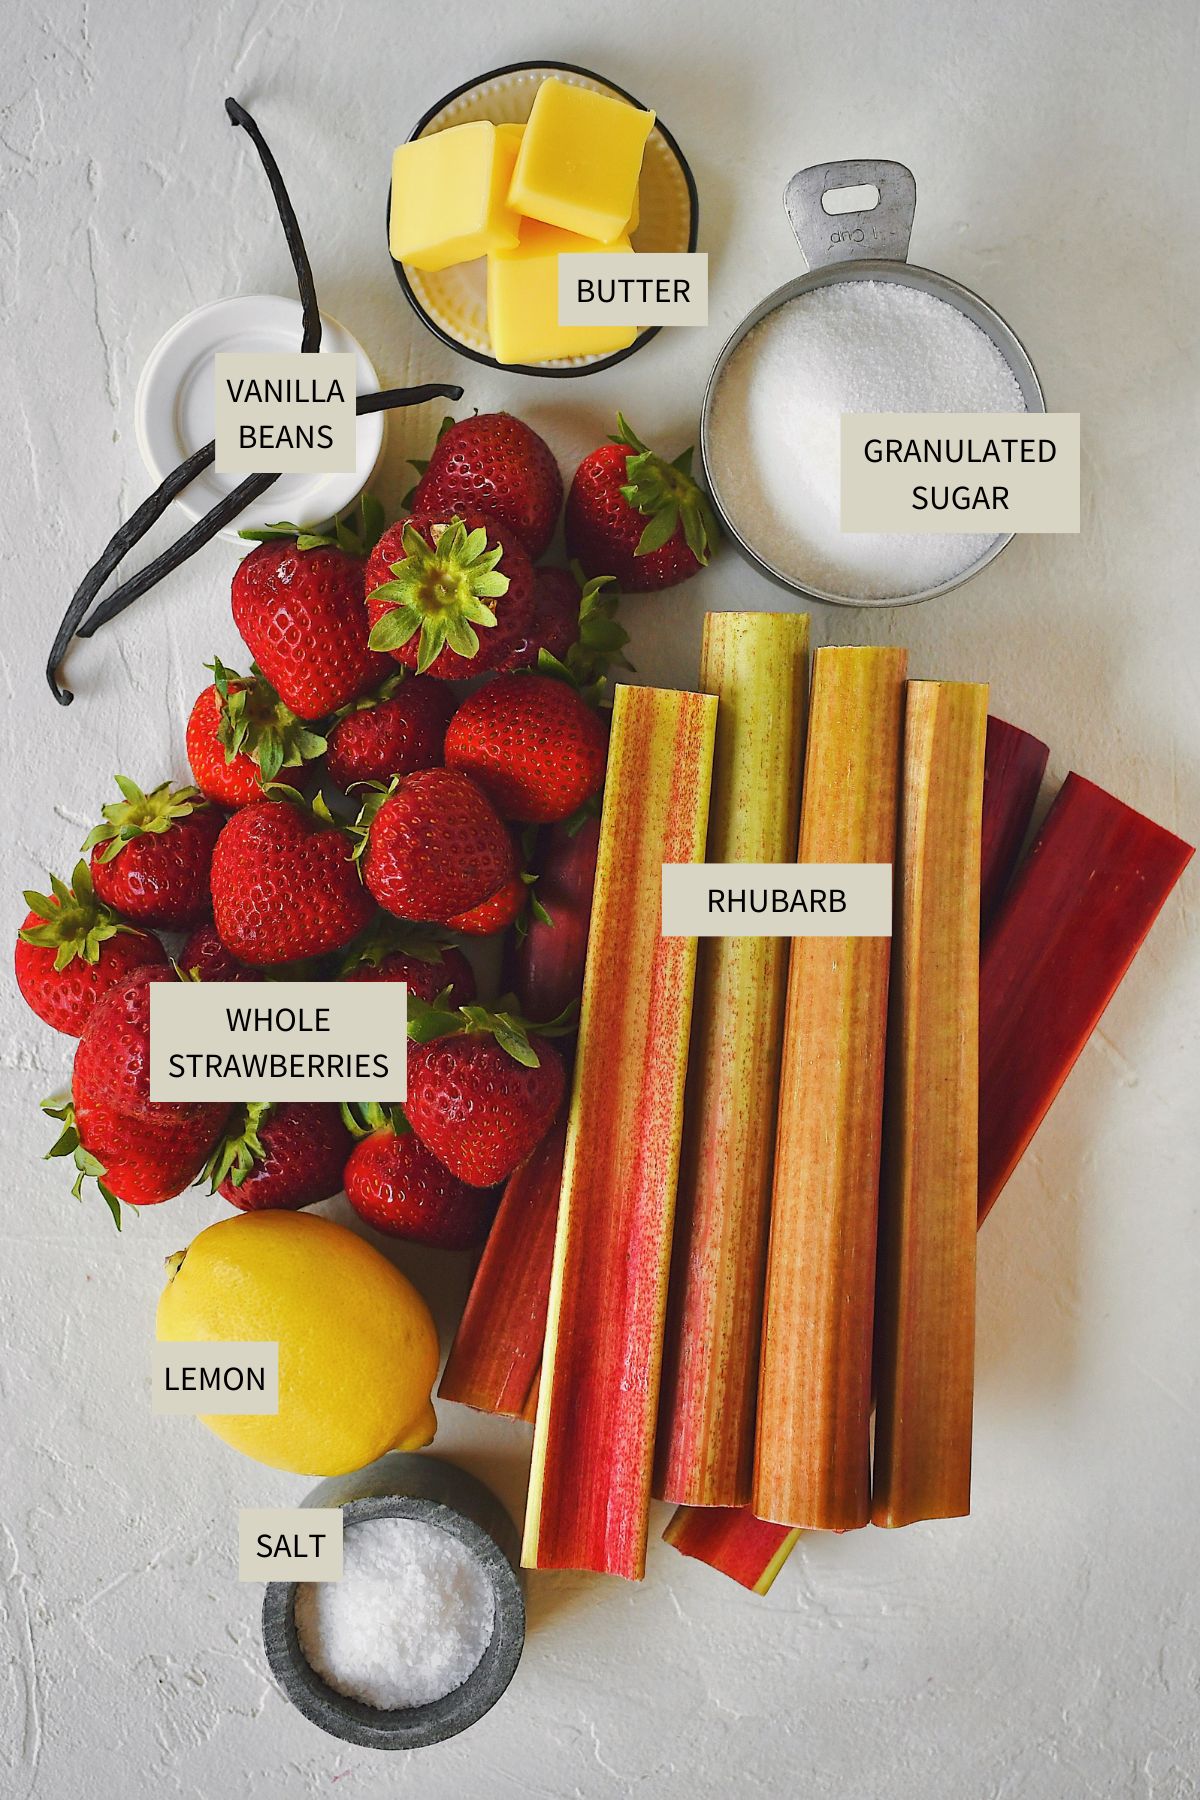 Ingredients needed to make Strawberry Rhubarb Jam.